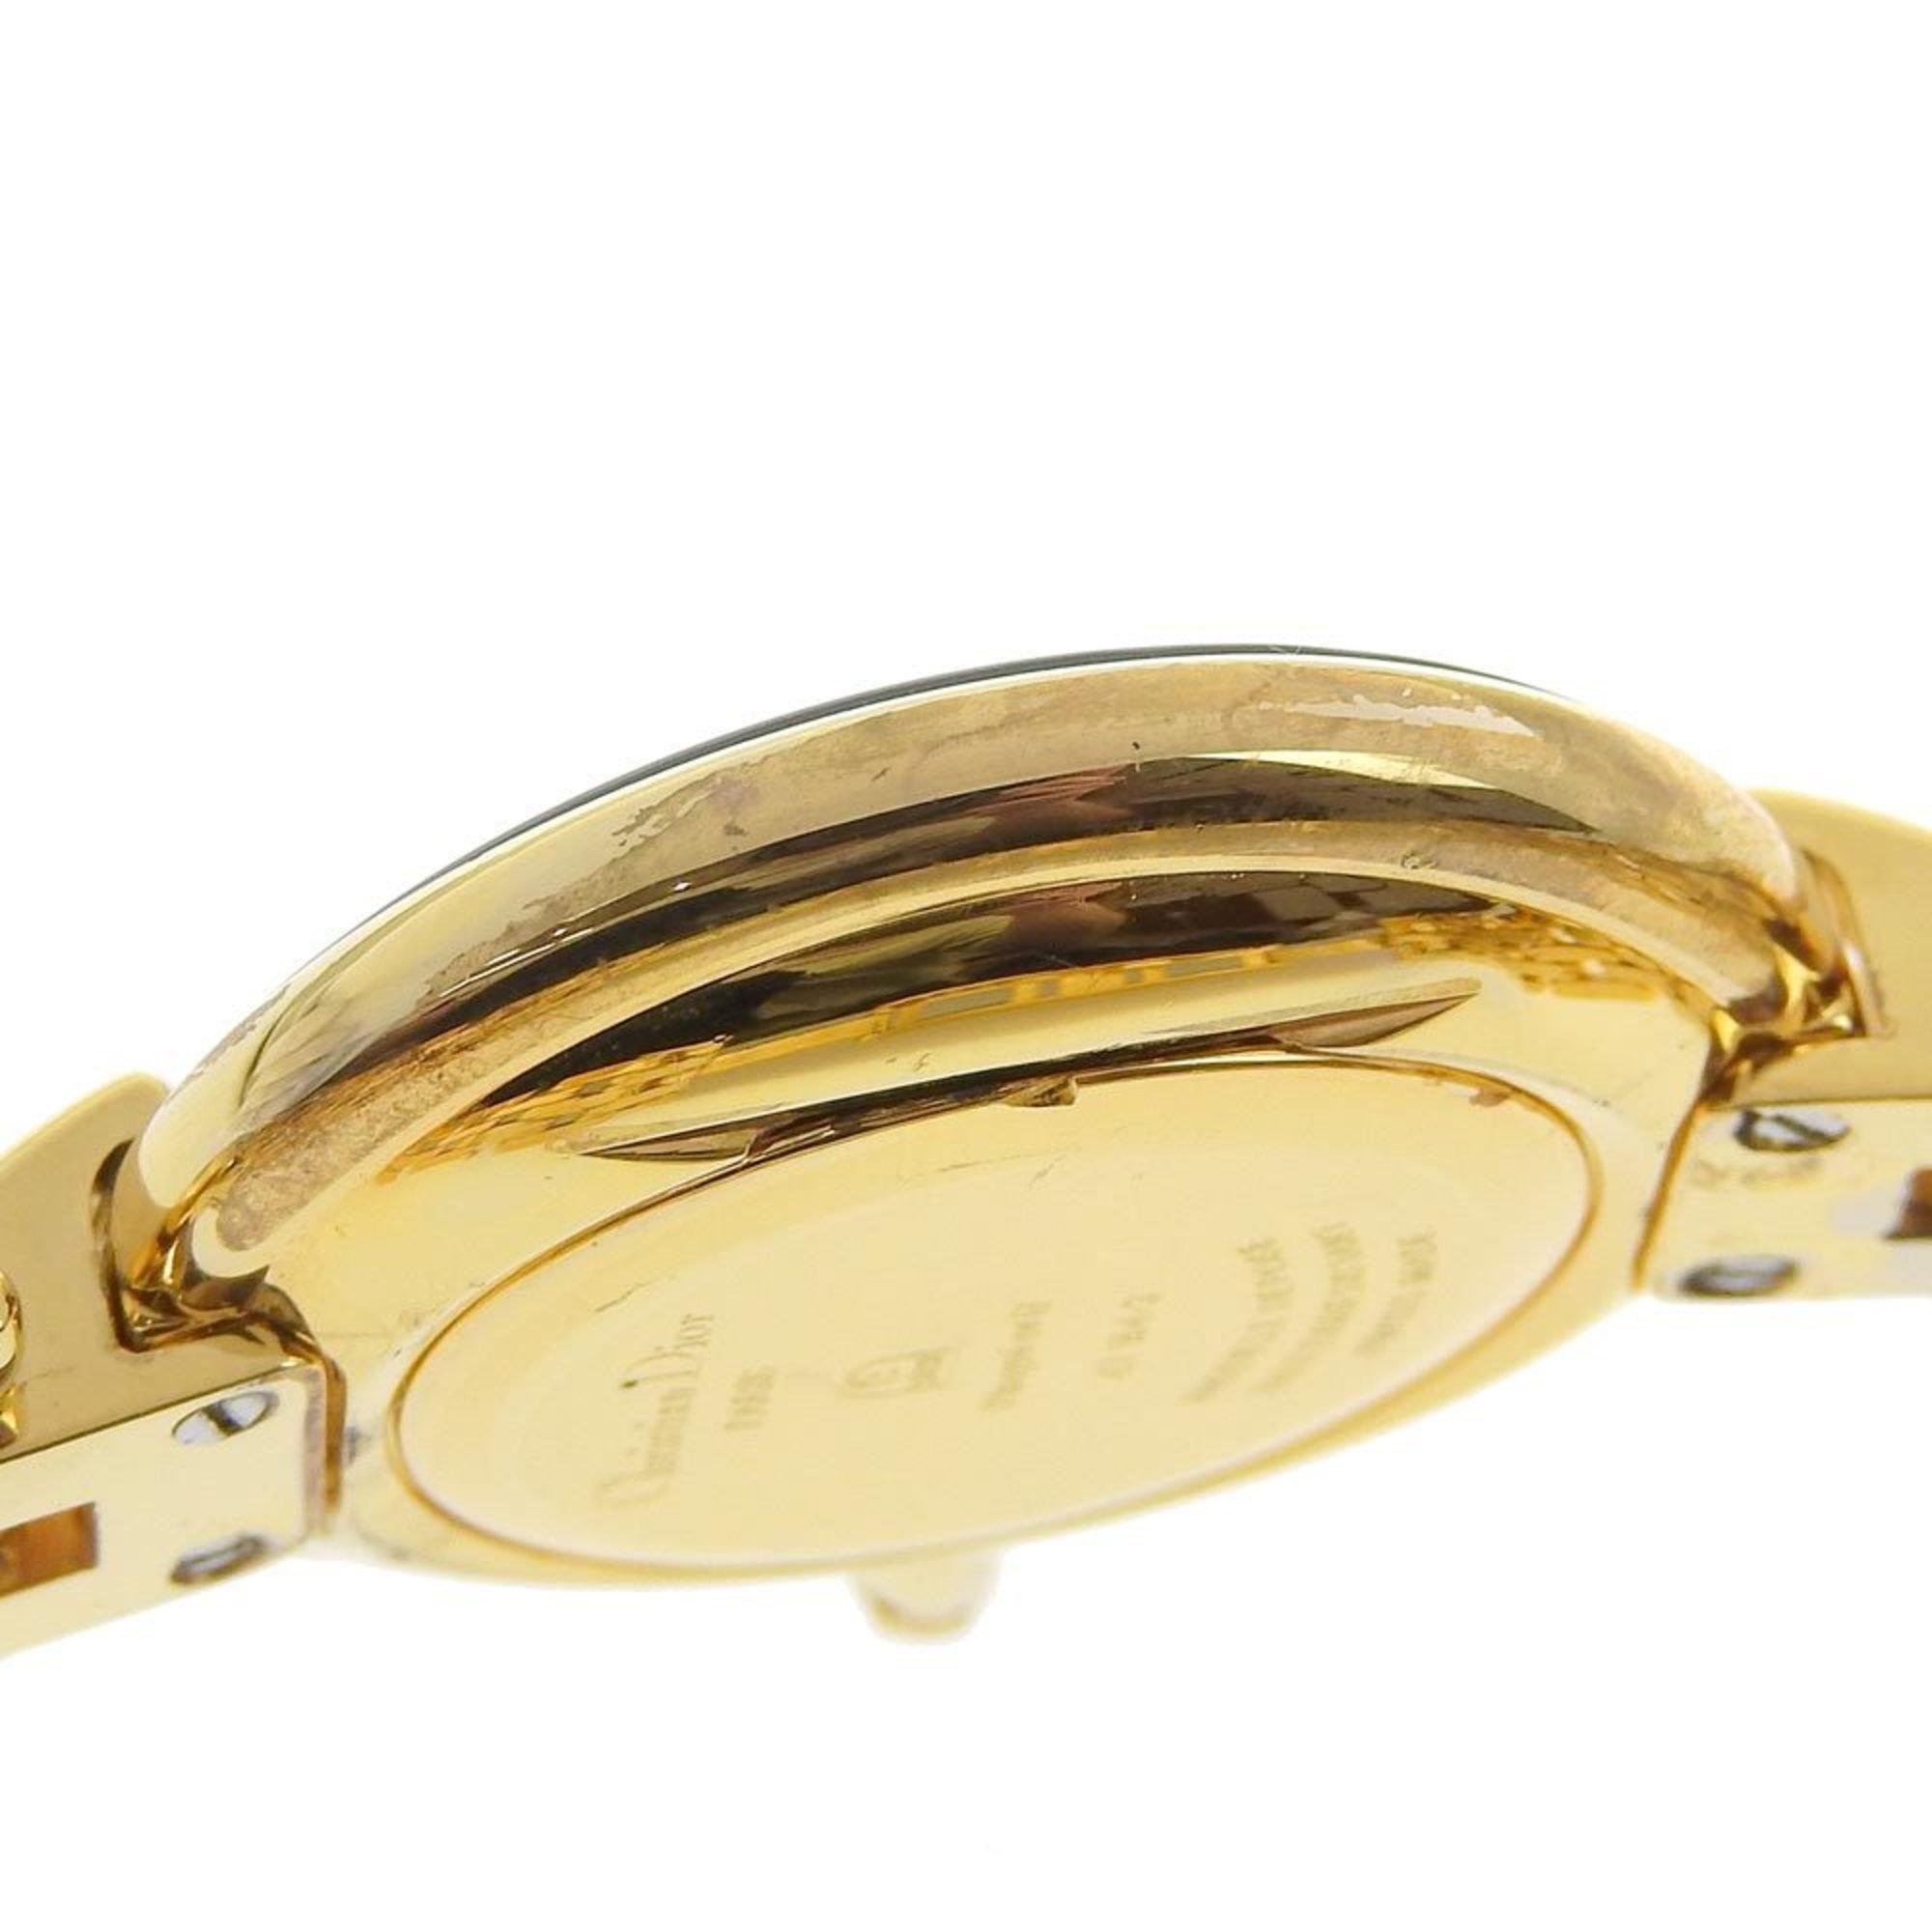 Christian Dior Bagira Watch 47154-3 Gold Plated Quartz Analog Display Black Dial Boys